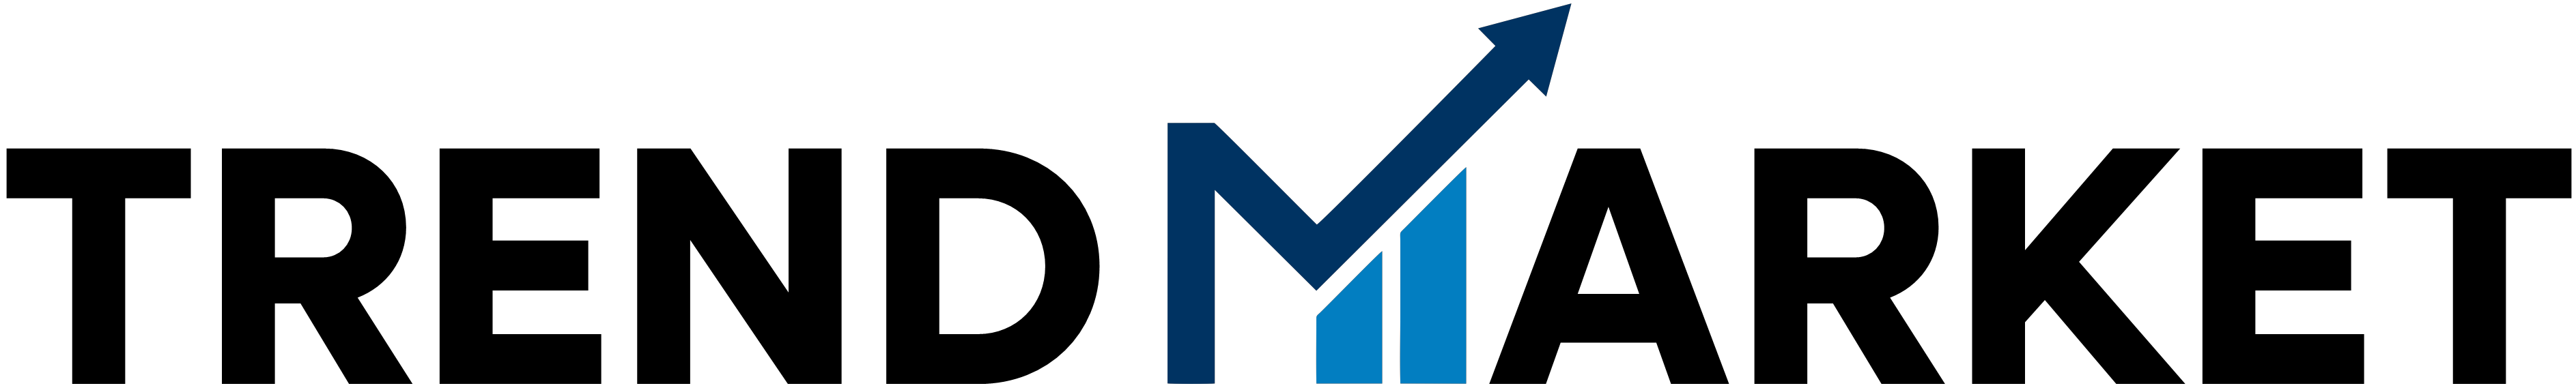 Trend.Market Logo